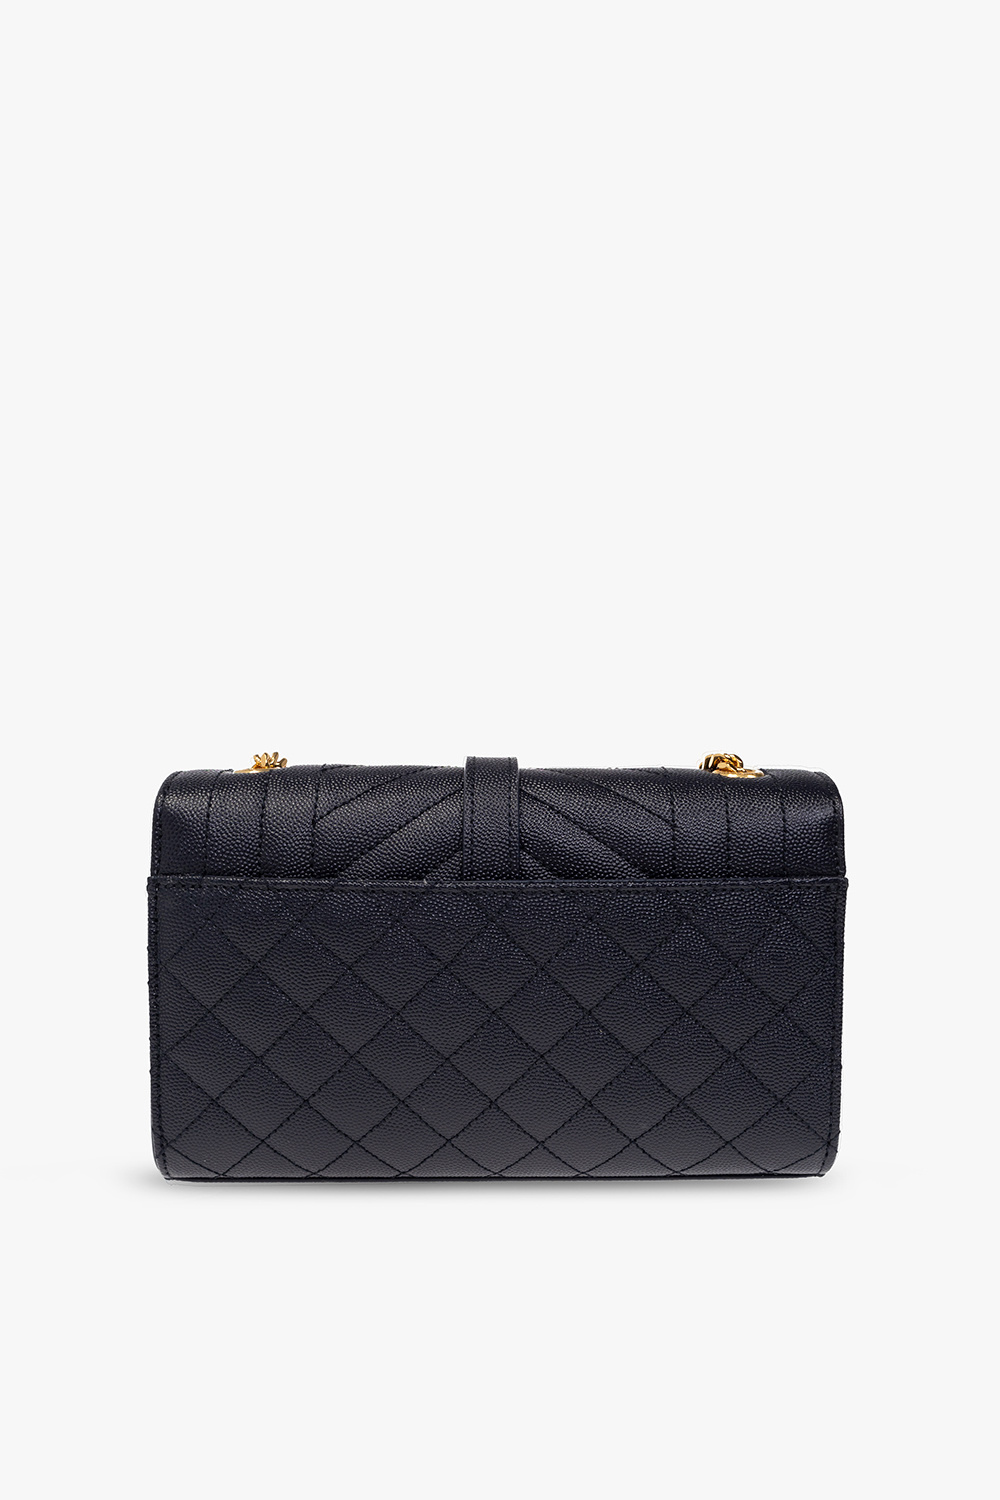 Buy Saint Laurent Small Envelope Chain Bag 'Dark Beige' - 600195 BOW91 2721